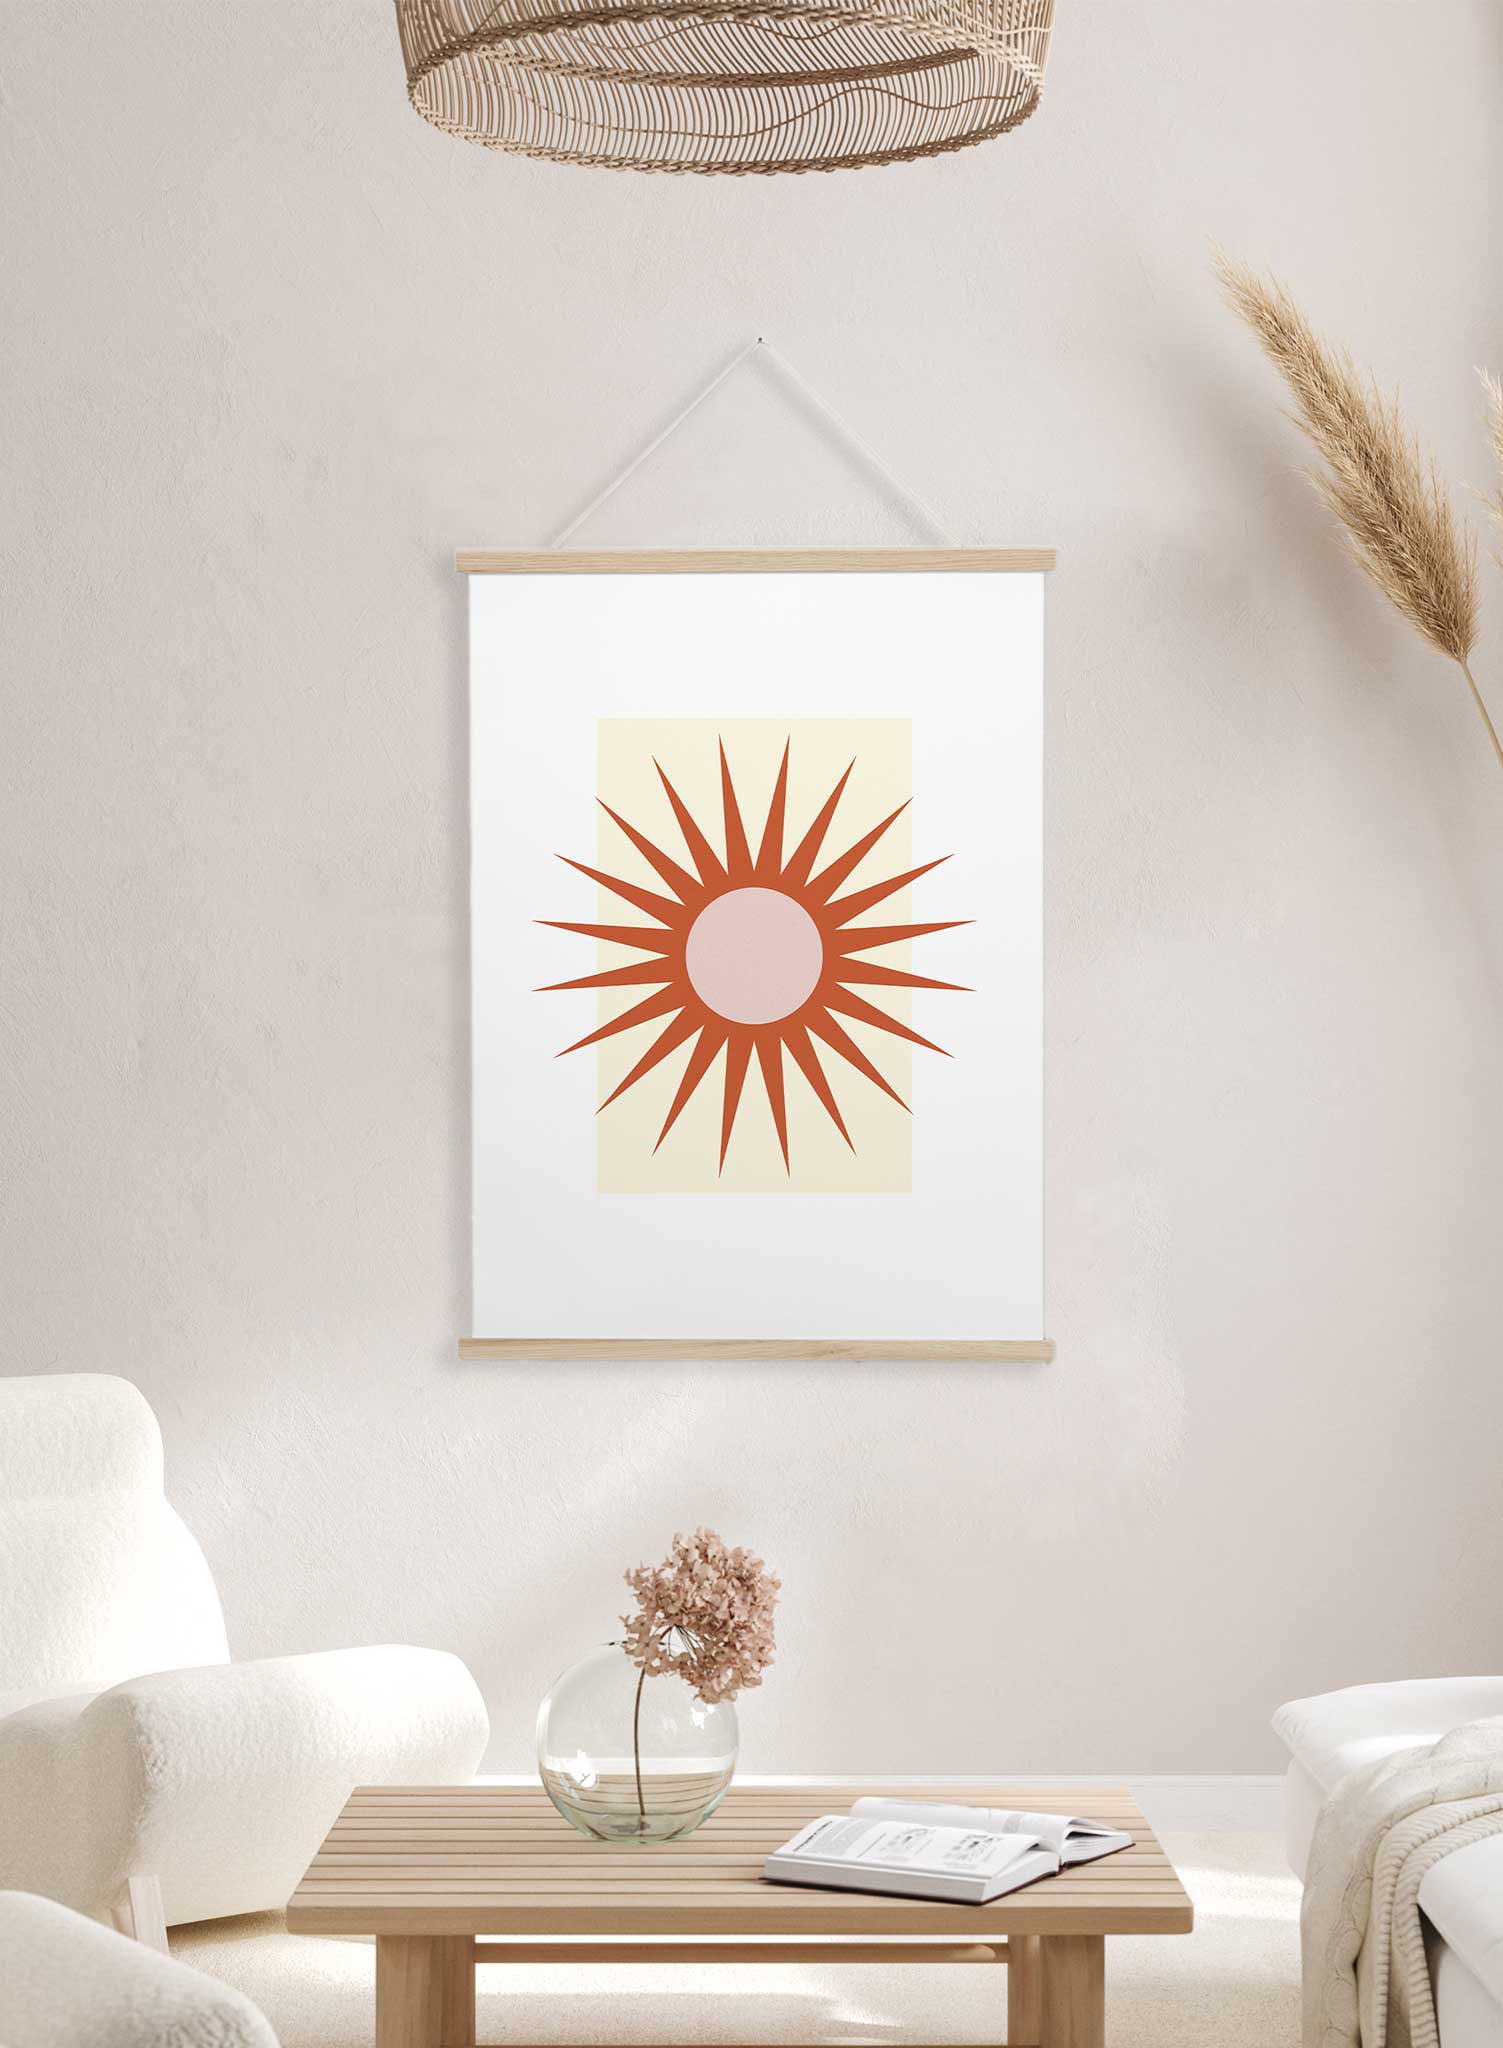 Minimalist Sun is a minimalist illustration poster of a blazing sun by Opposite Wall.